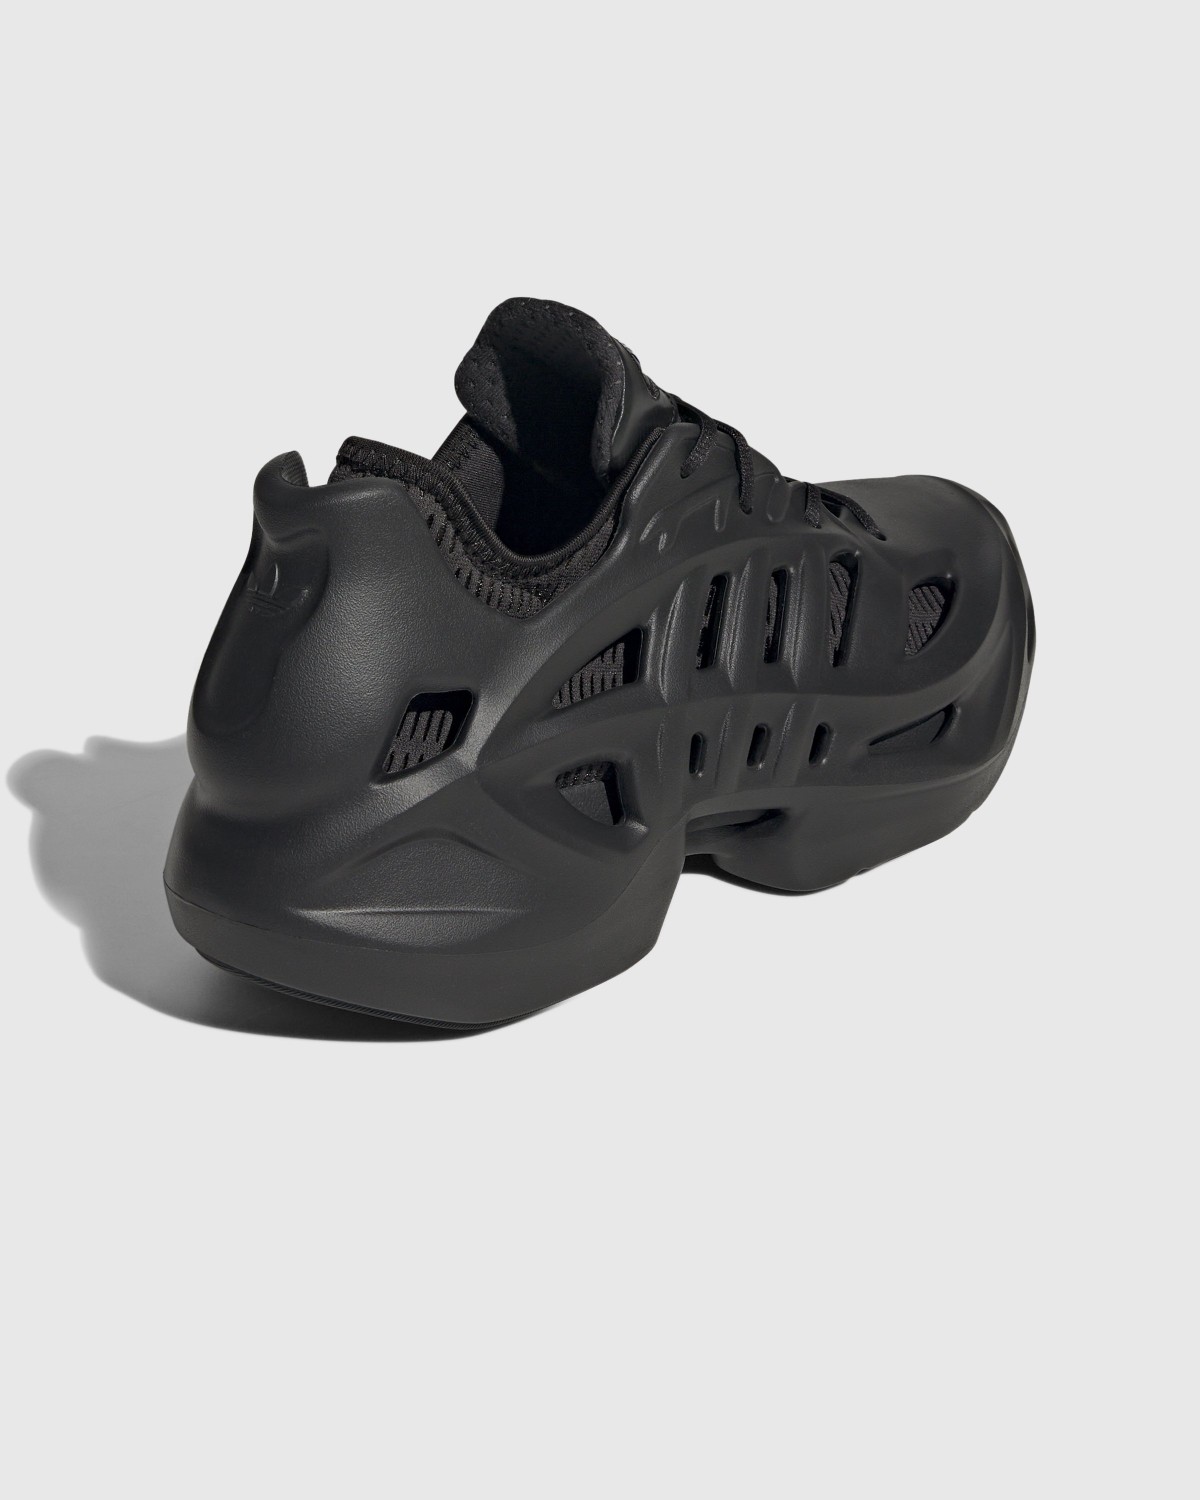 Adidas – Adifom Climacool Core Black/Silver Metallic | Highsnobiety Shop